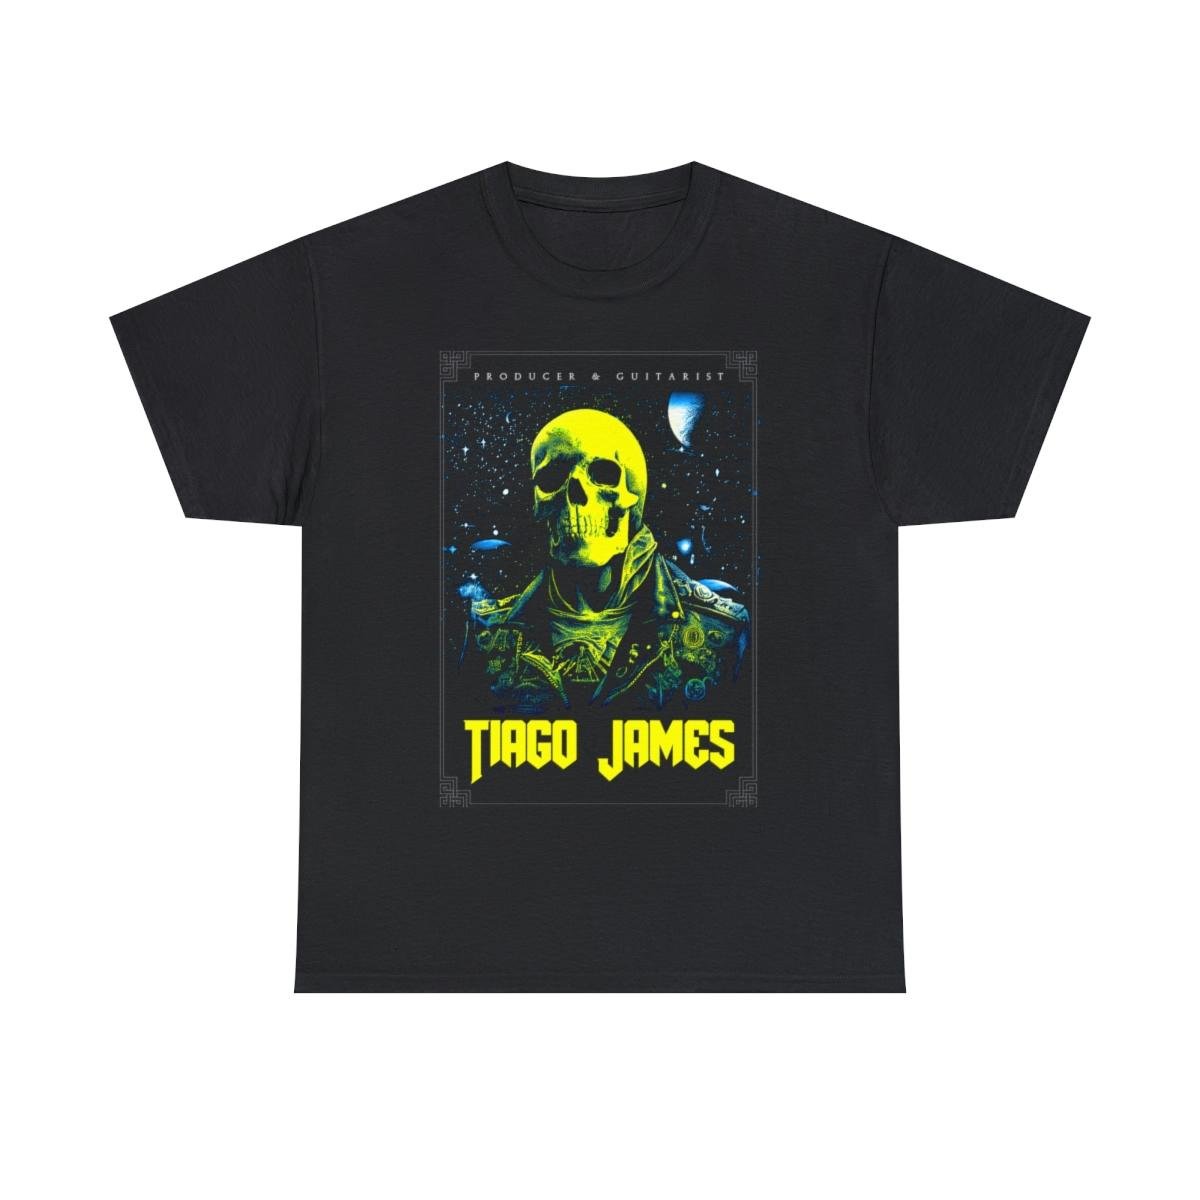 Tiago James – Guitarist And Producer Short Sleeve Tshirt